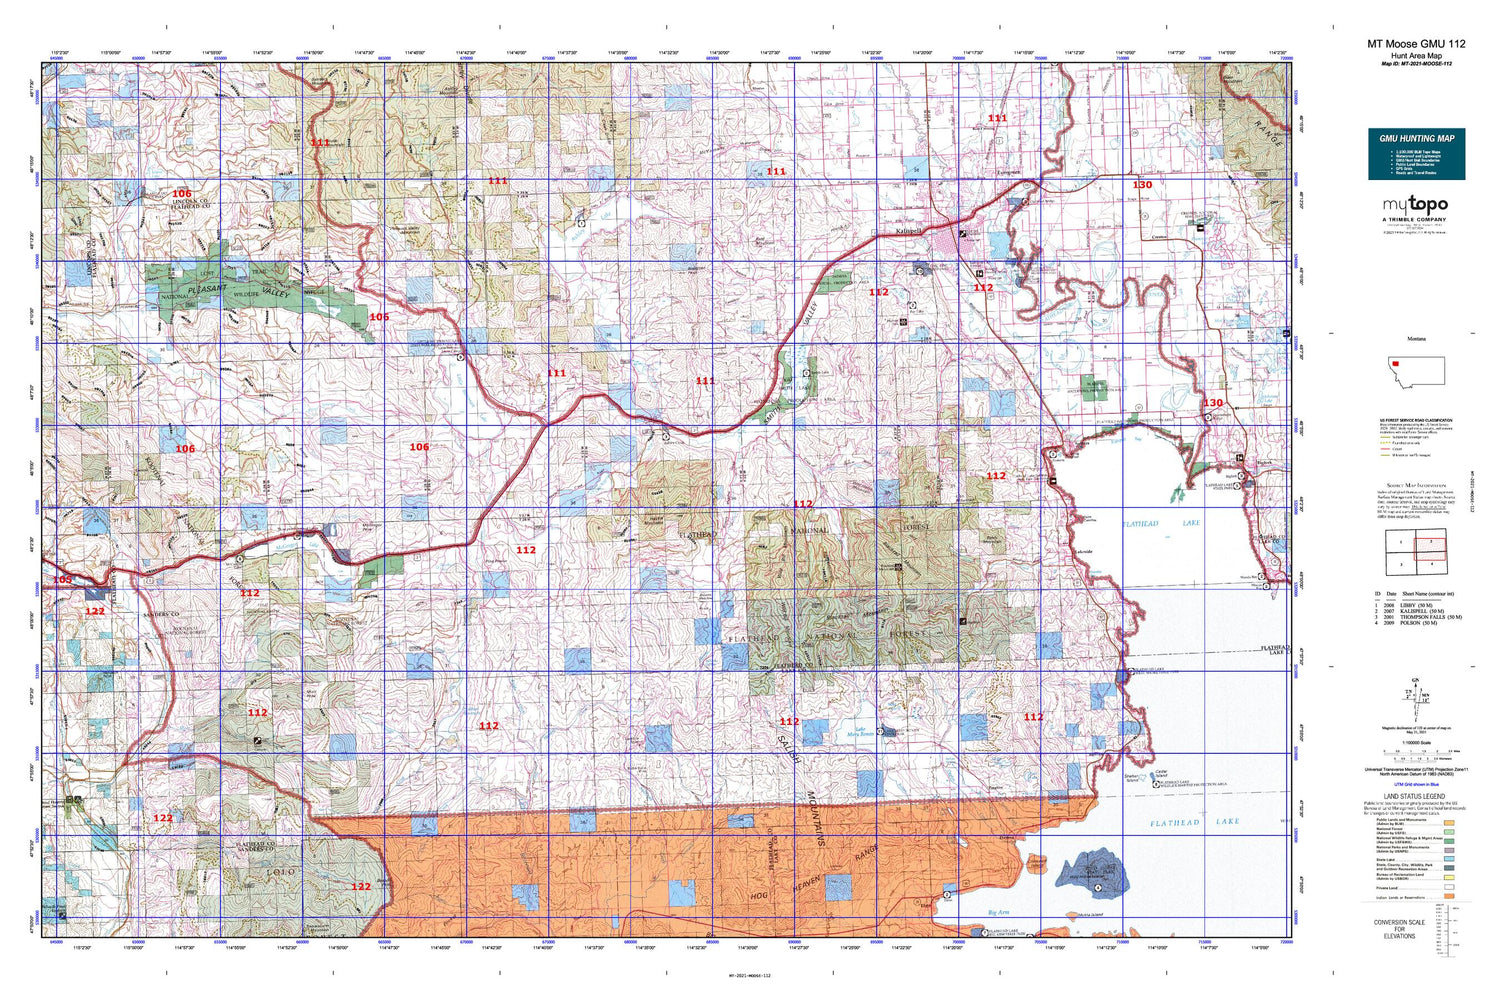 Montana Moose GMU 112 Map Image